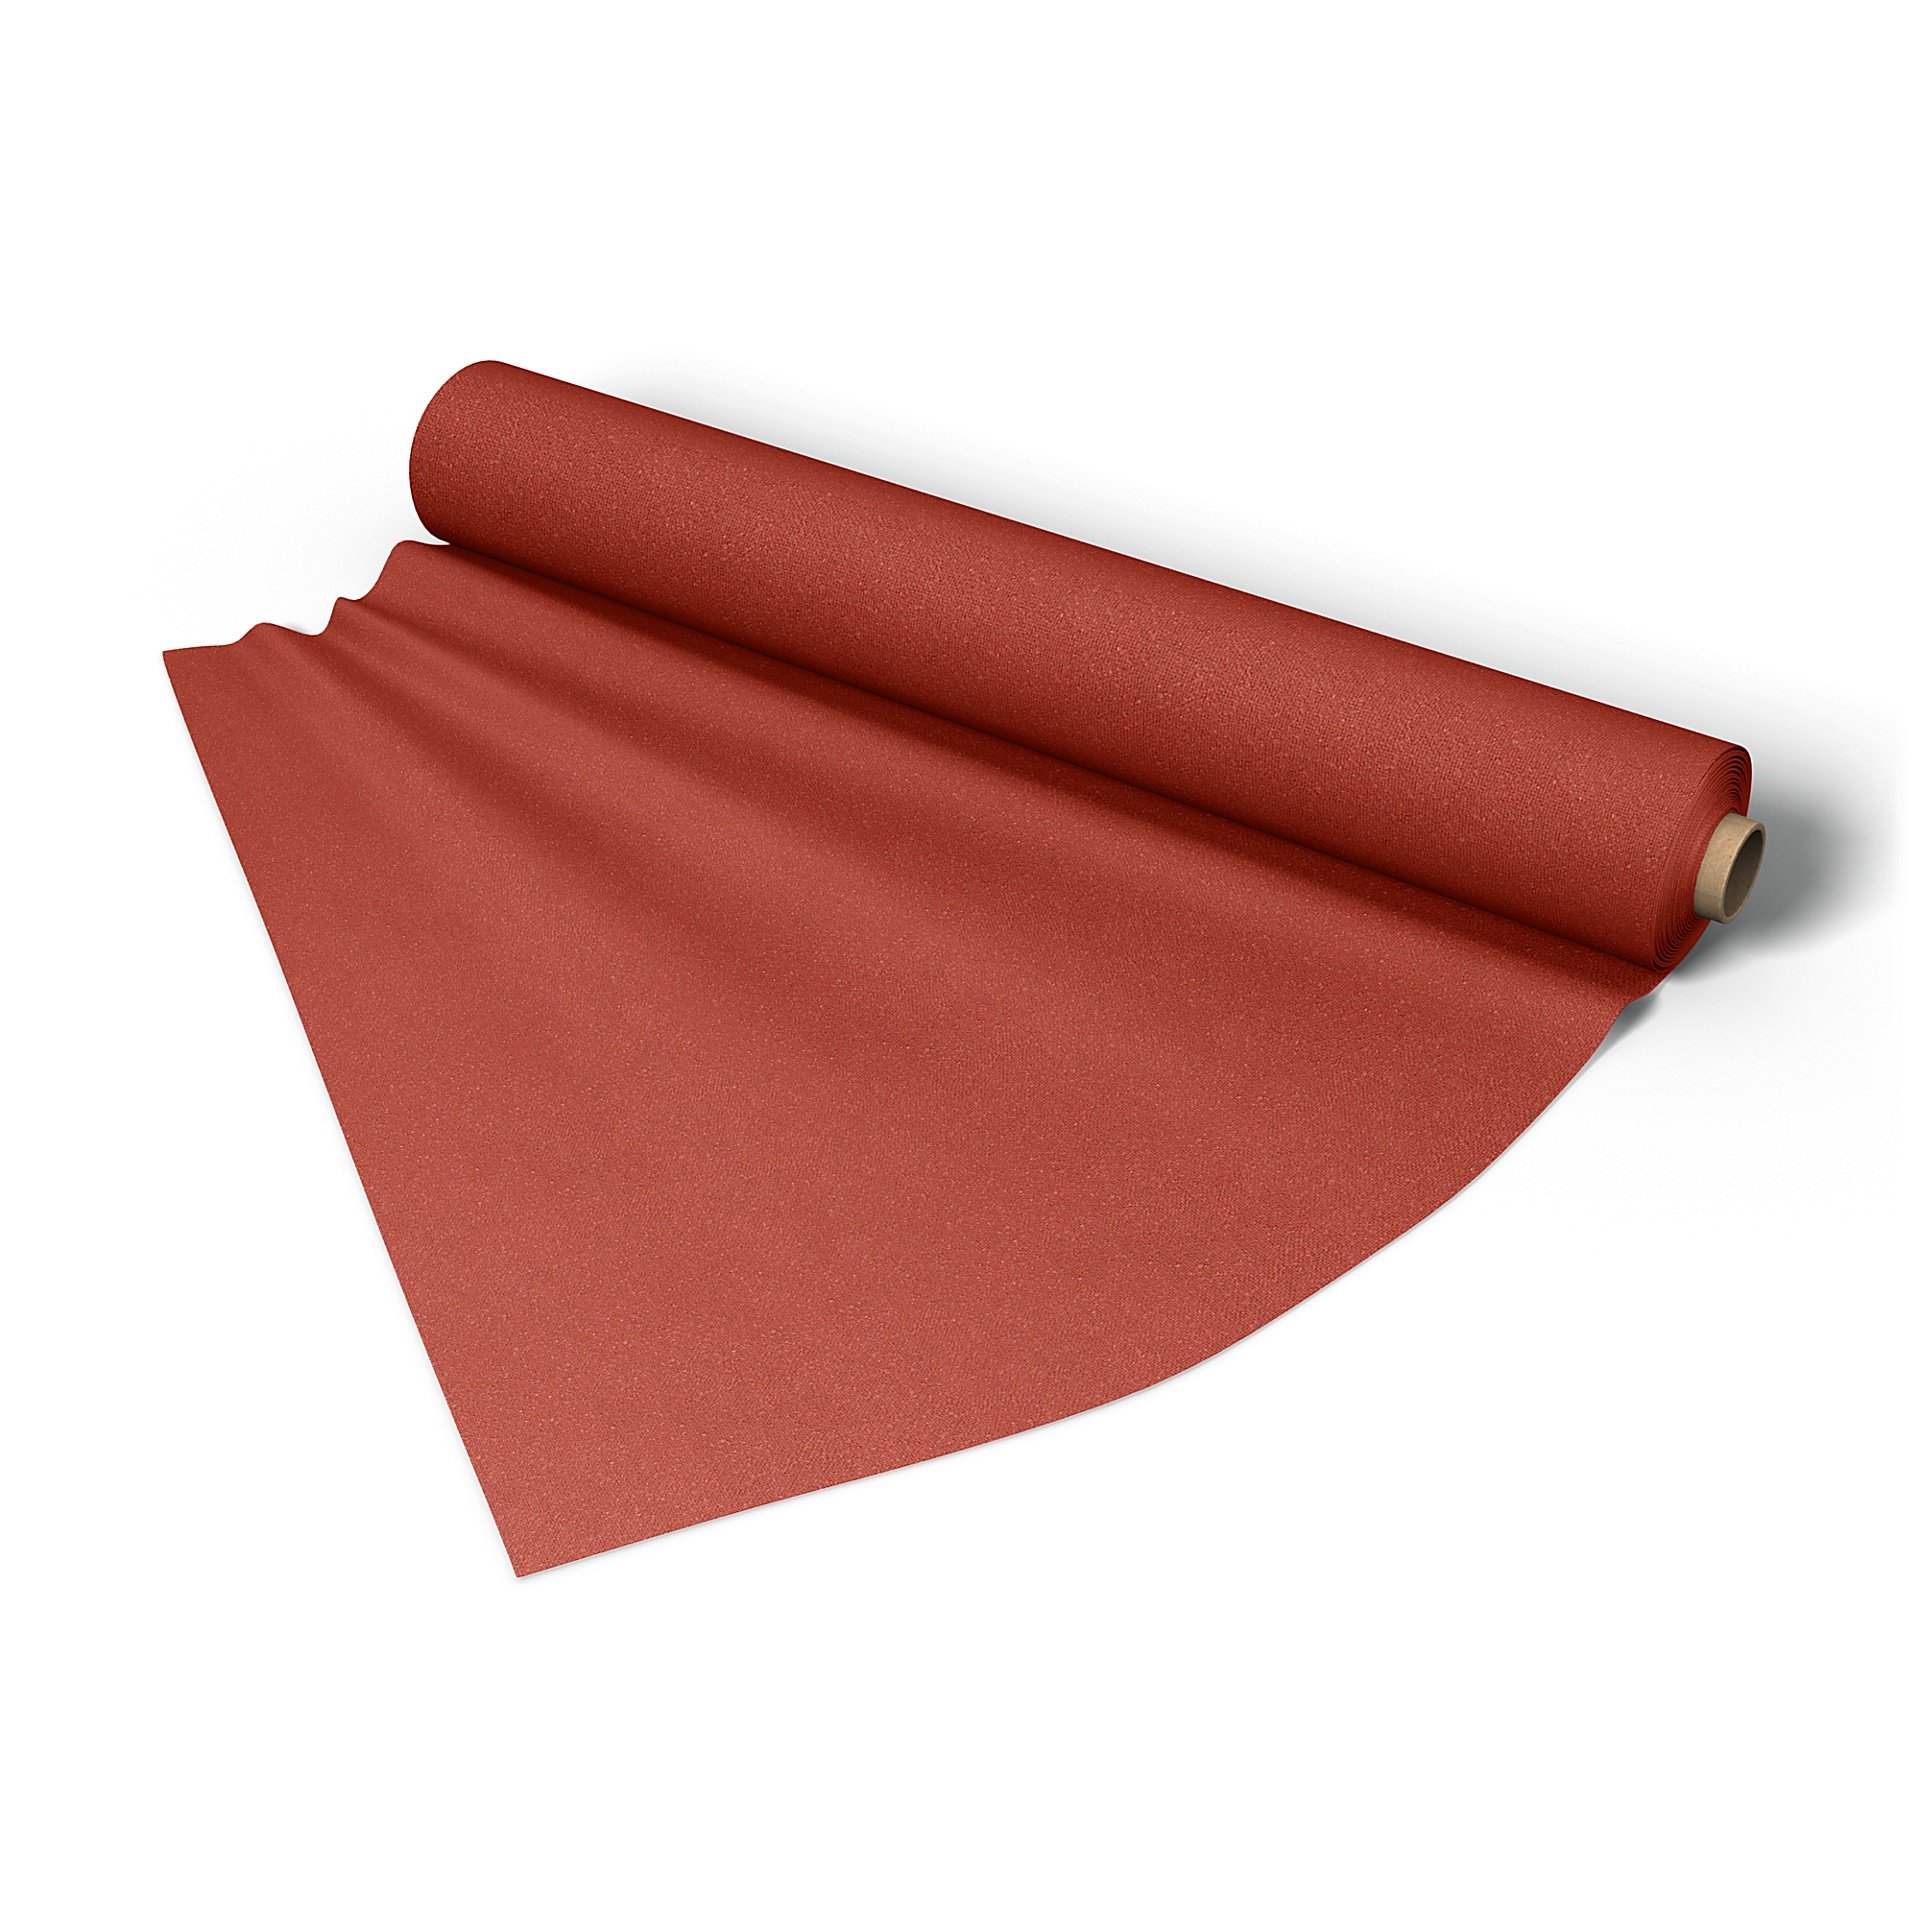 Fabric per metre, Coral Red, Outdoor - Bemz